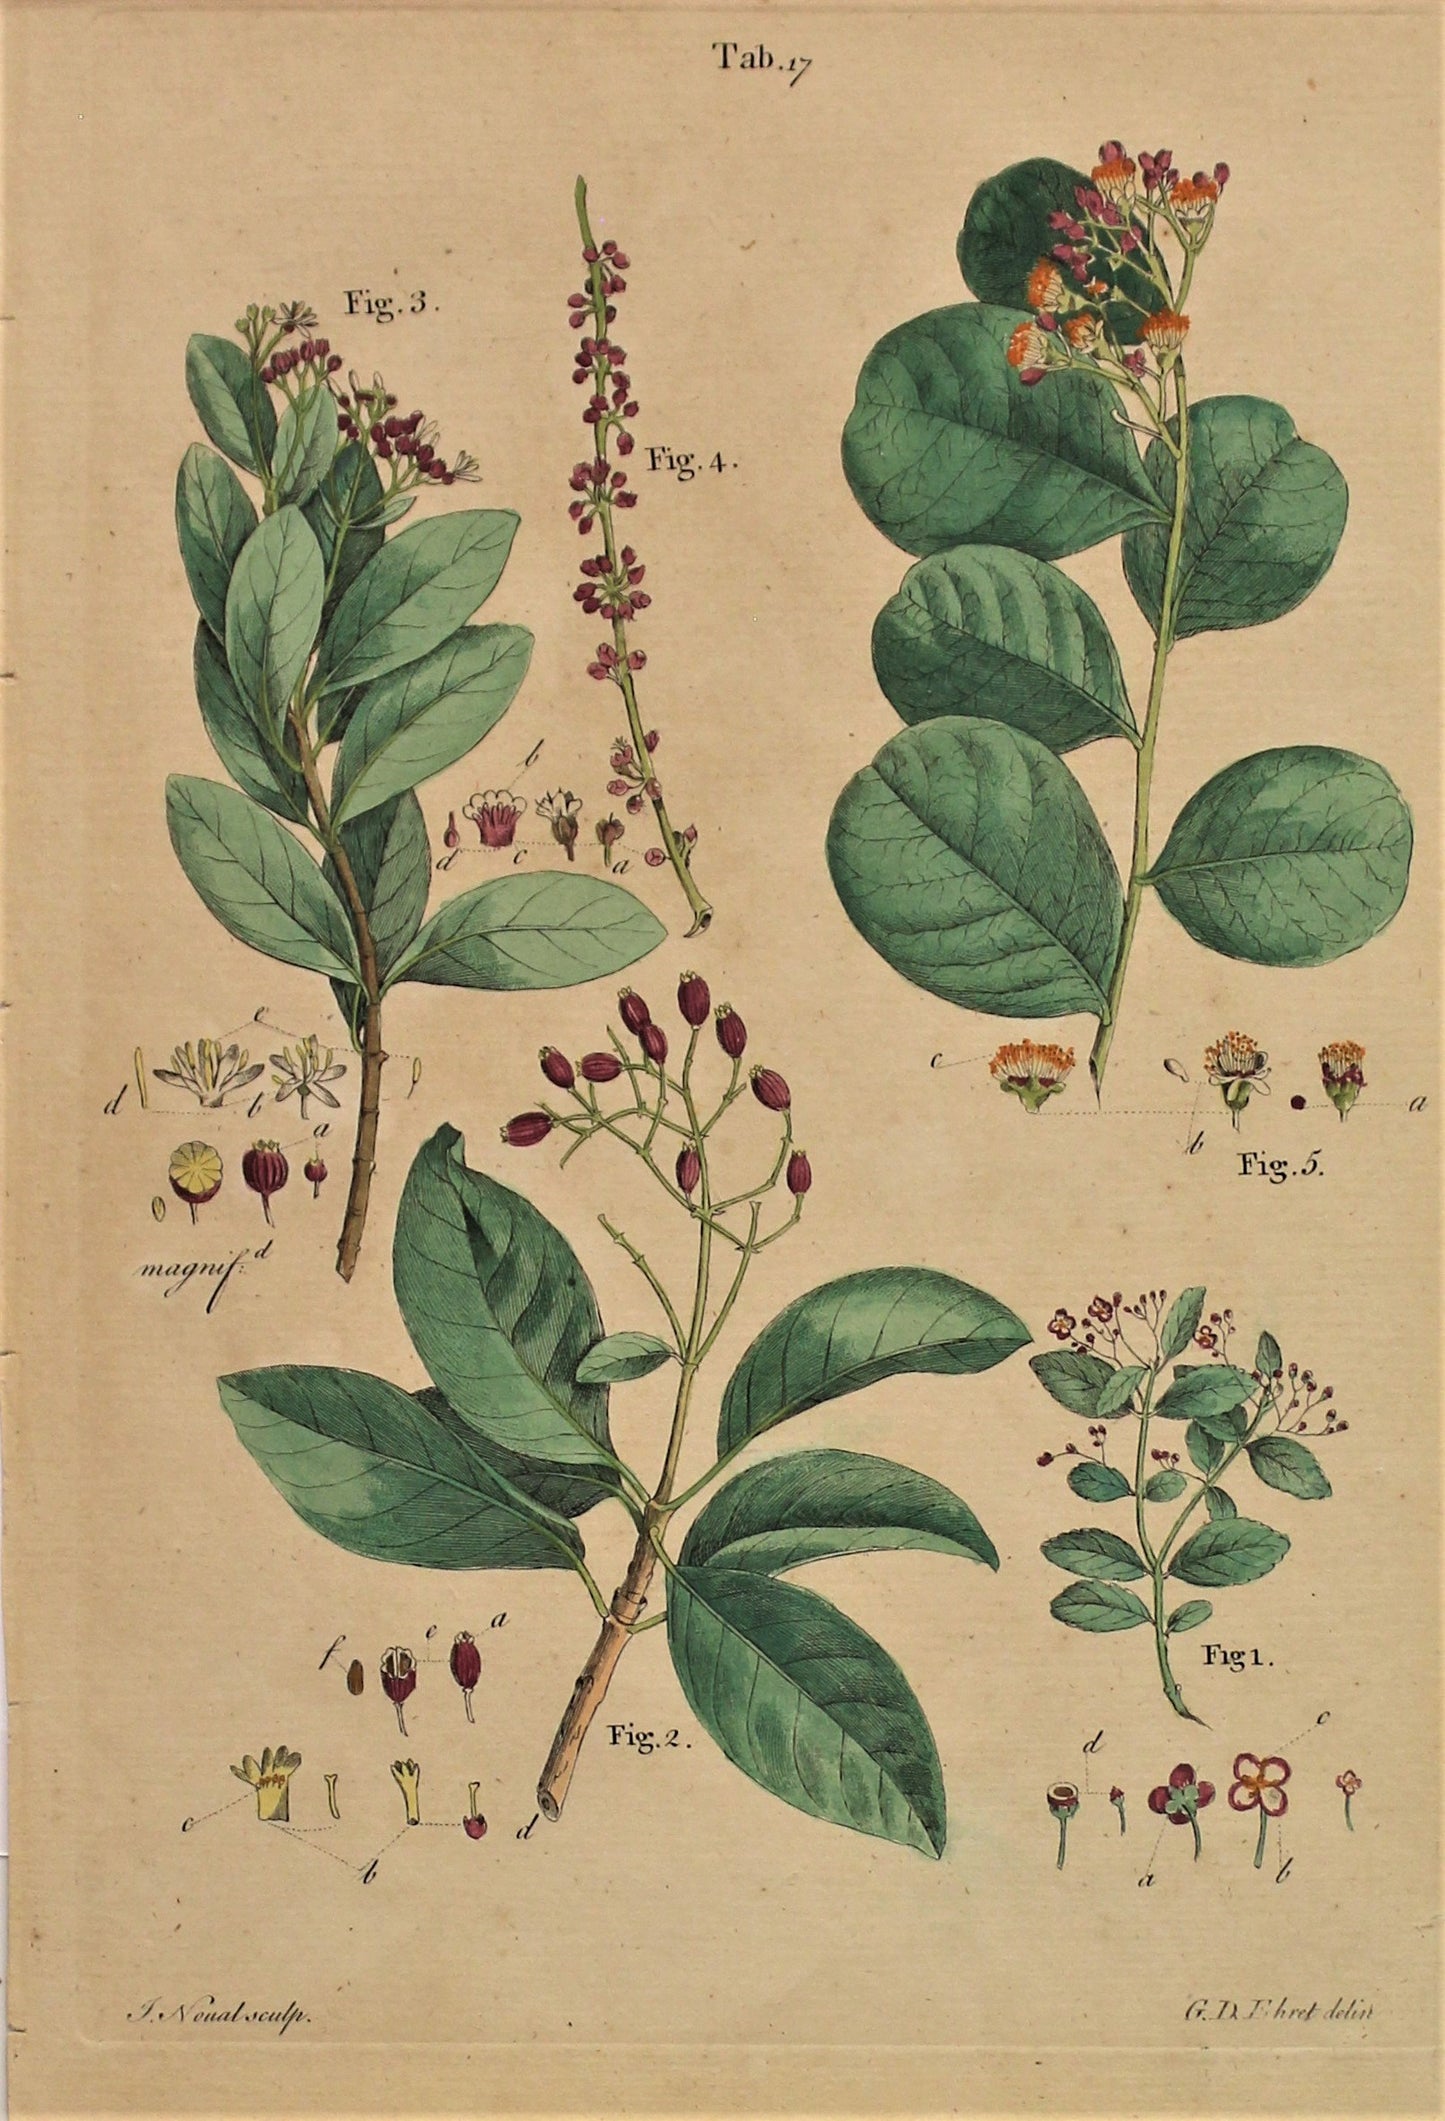 Botanical, Ehret Georg Dionysius, Unamed Botanicals, Figures 1,2,3,and 4, Tab 17